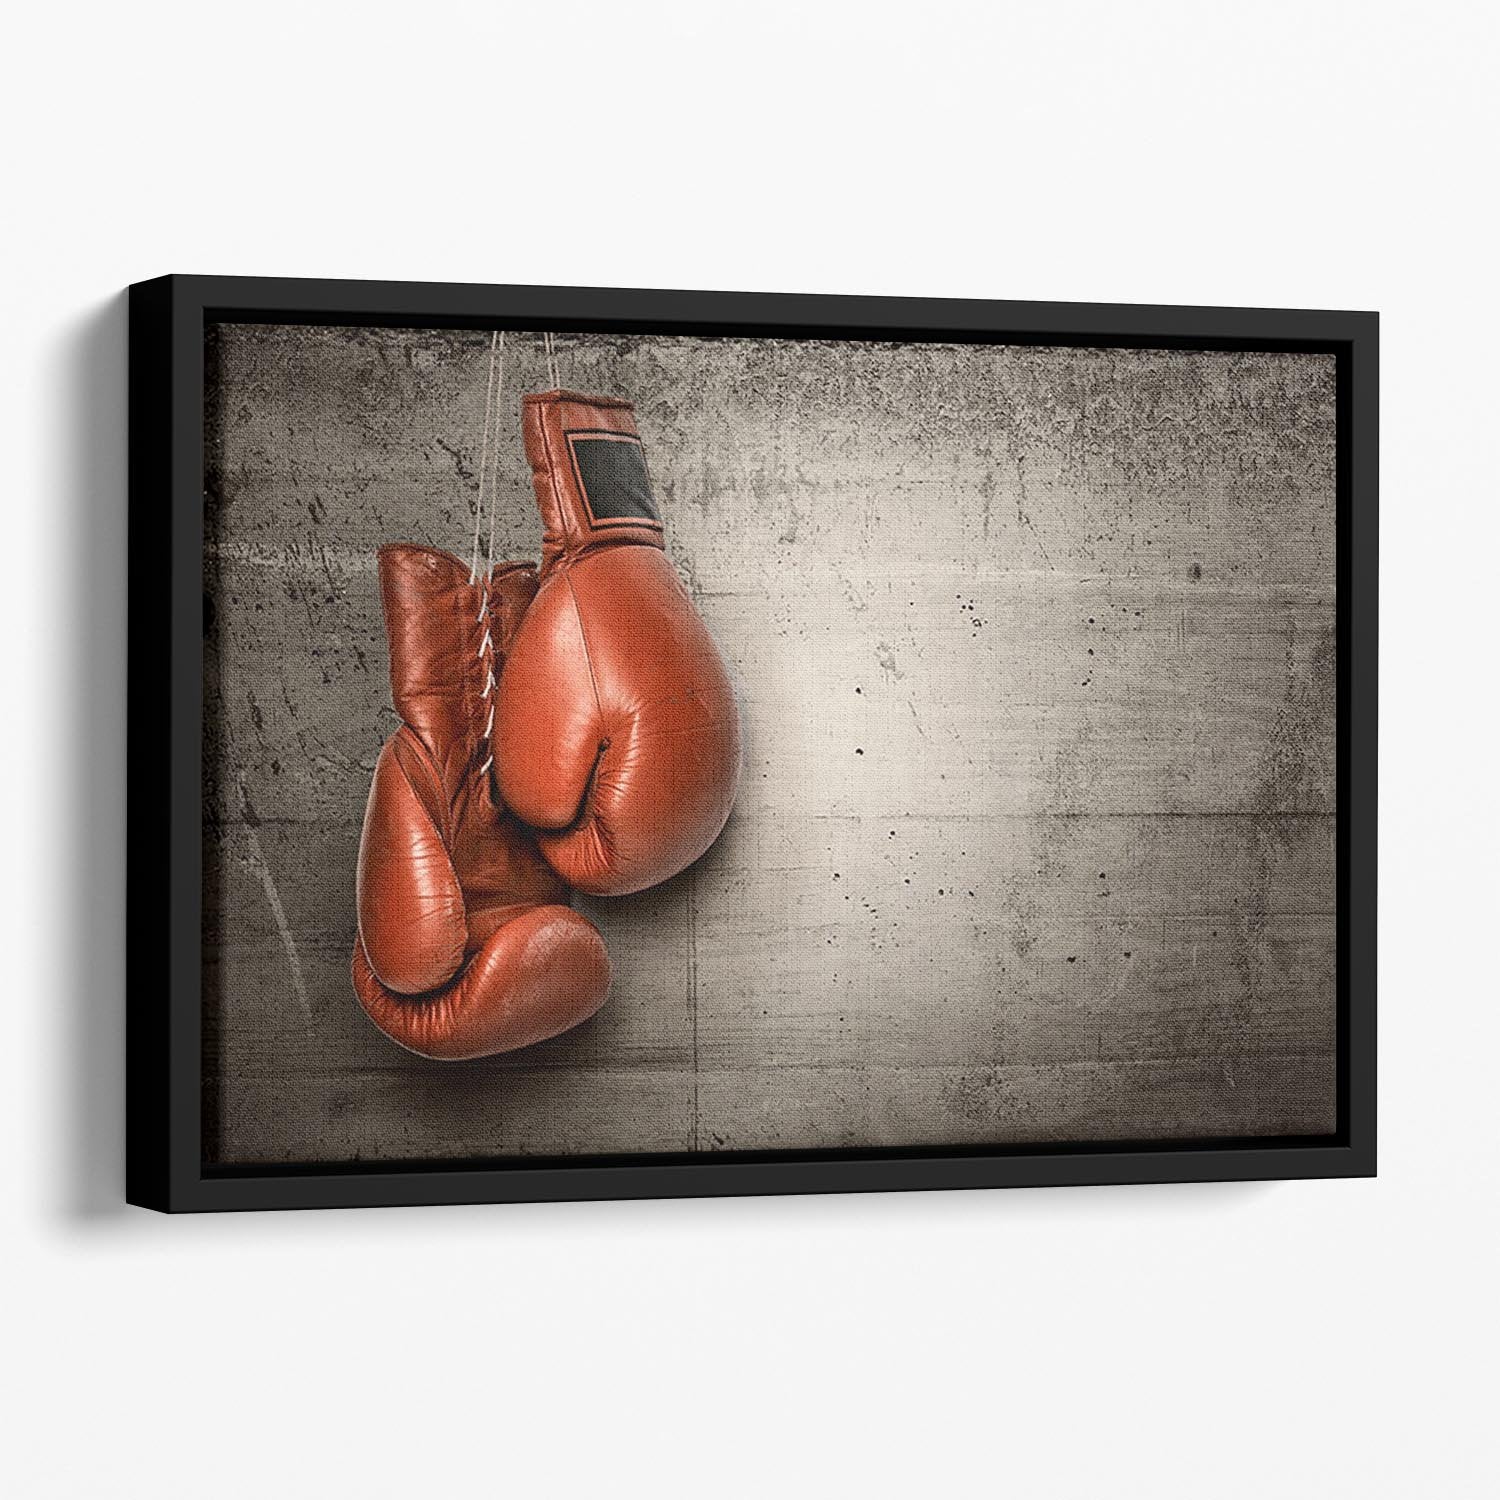 Boxing gloves hanging on concrete Floating Framed Canvas - Canvas Art Rocks - 1